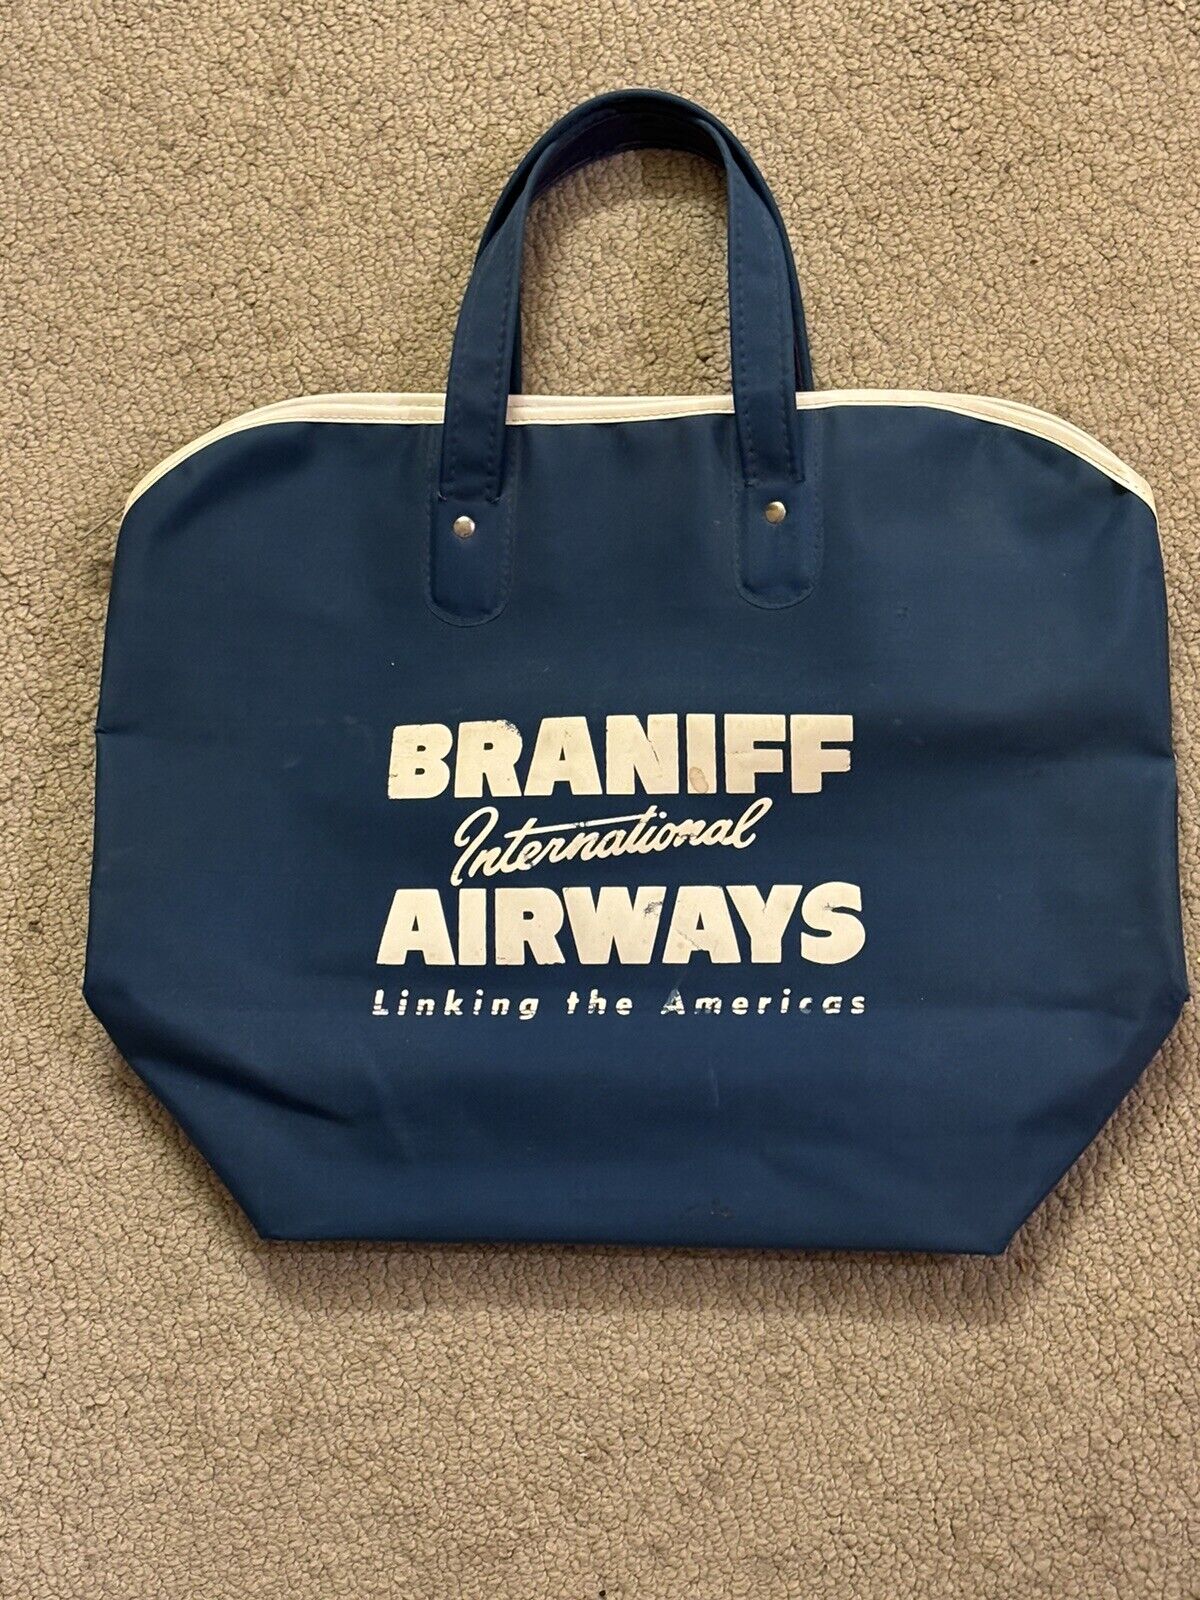 Vintage Braniff Airlines Travel Bag